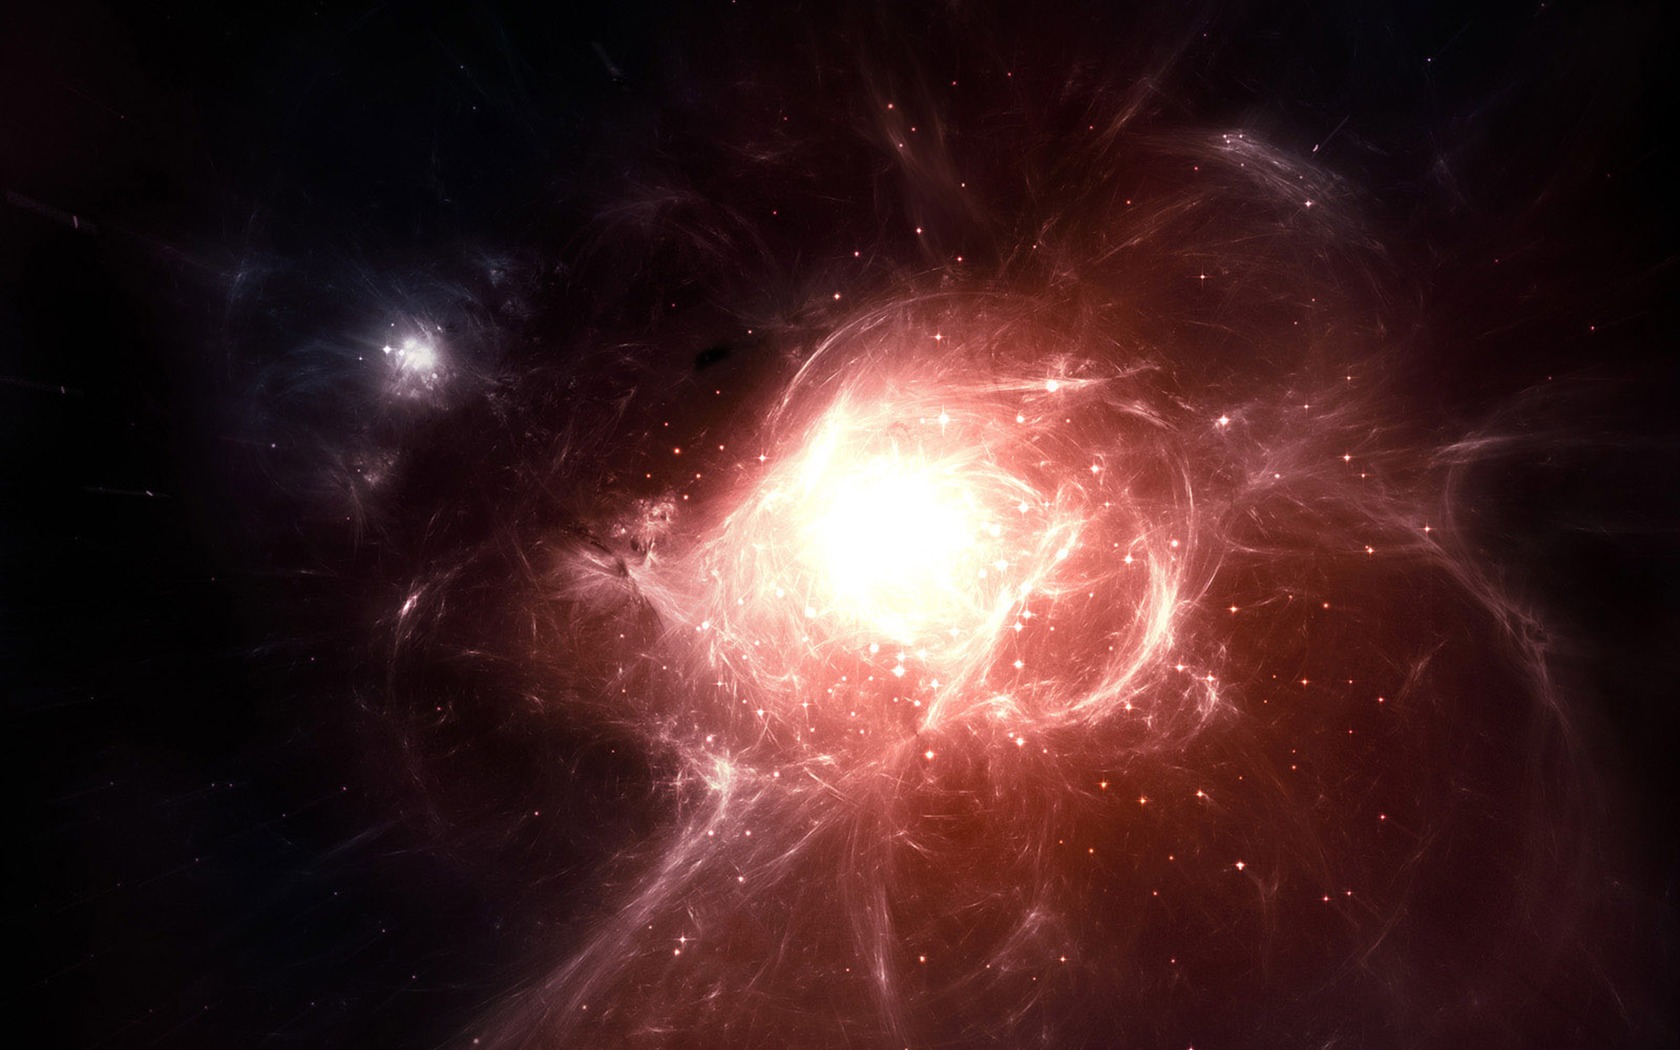 Infinito Universo, la bella estrella de Escritorio #33 - 1680x1050